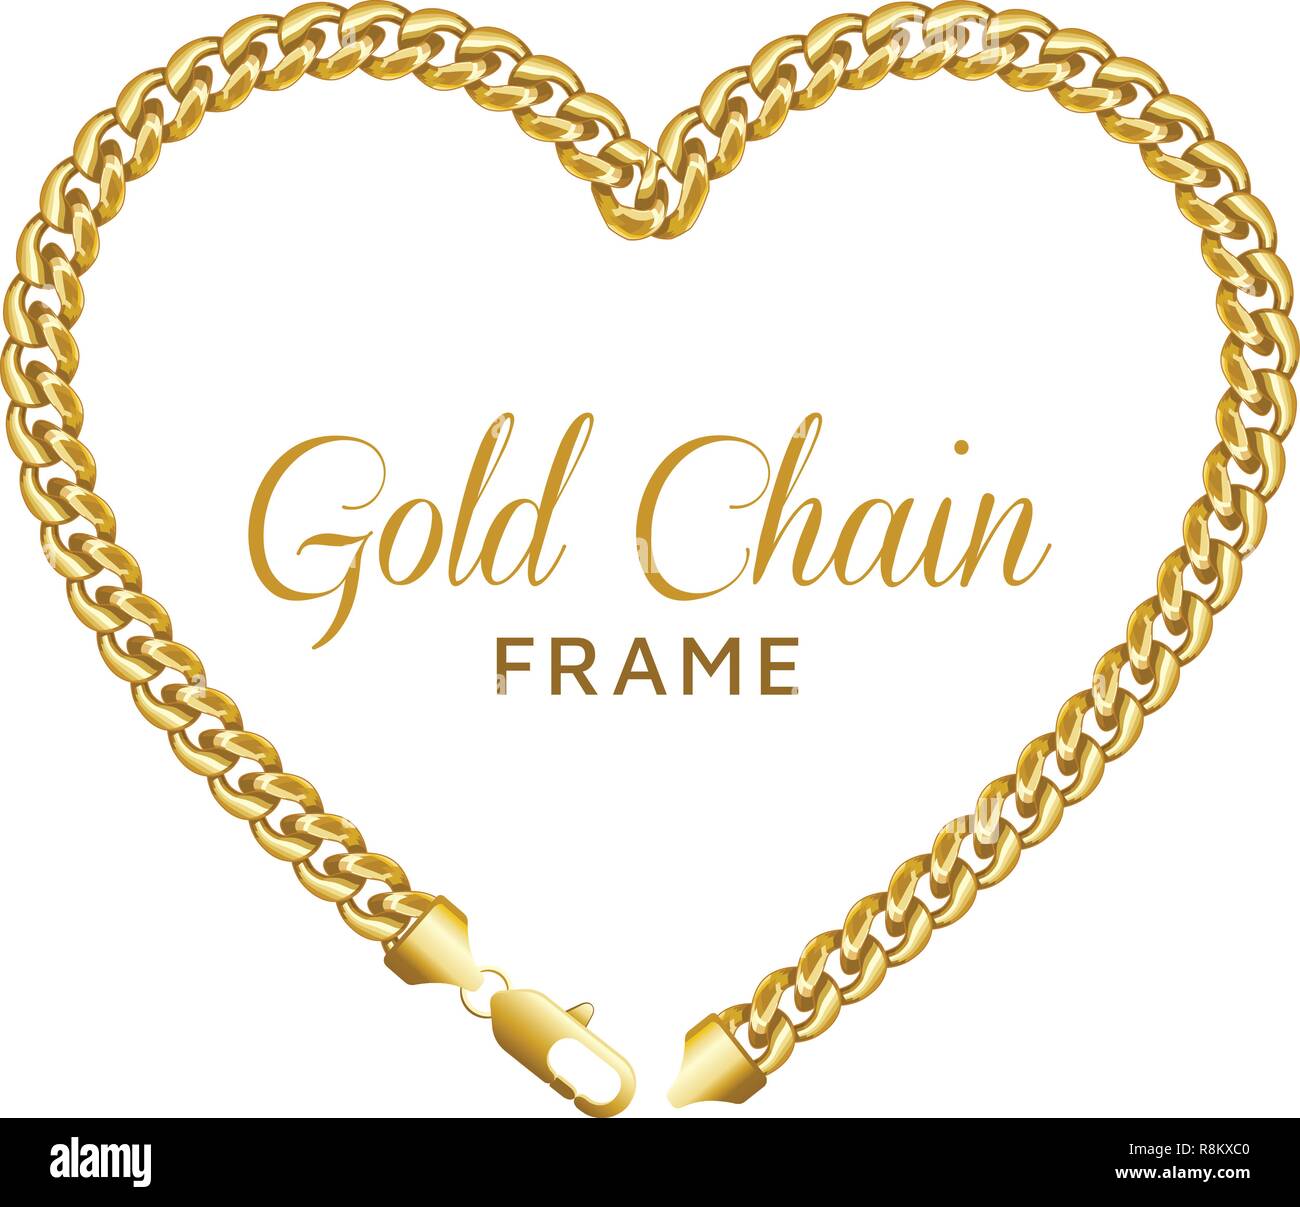 Gold chain heart love border frame. Wreath shape with a lobster lock. Stock Vector